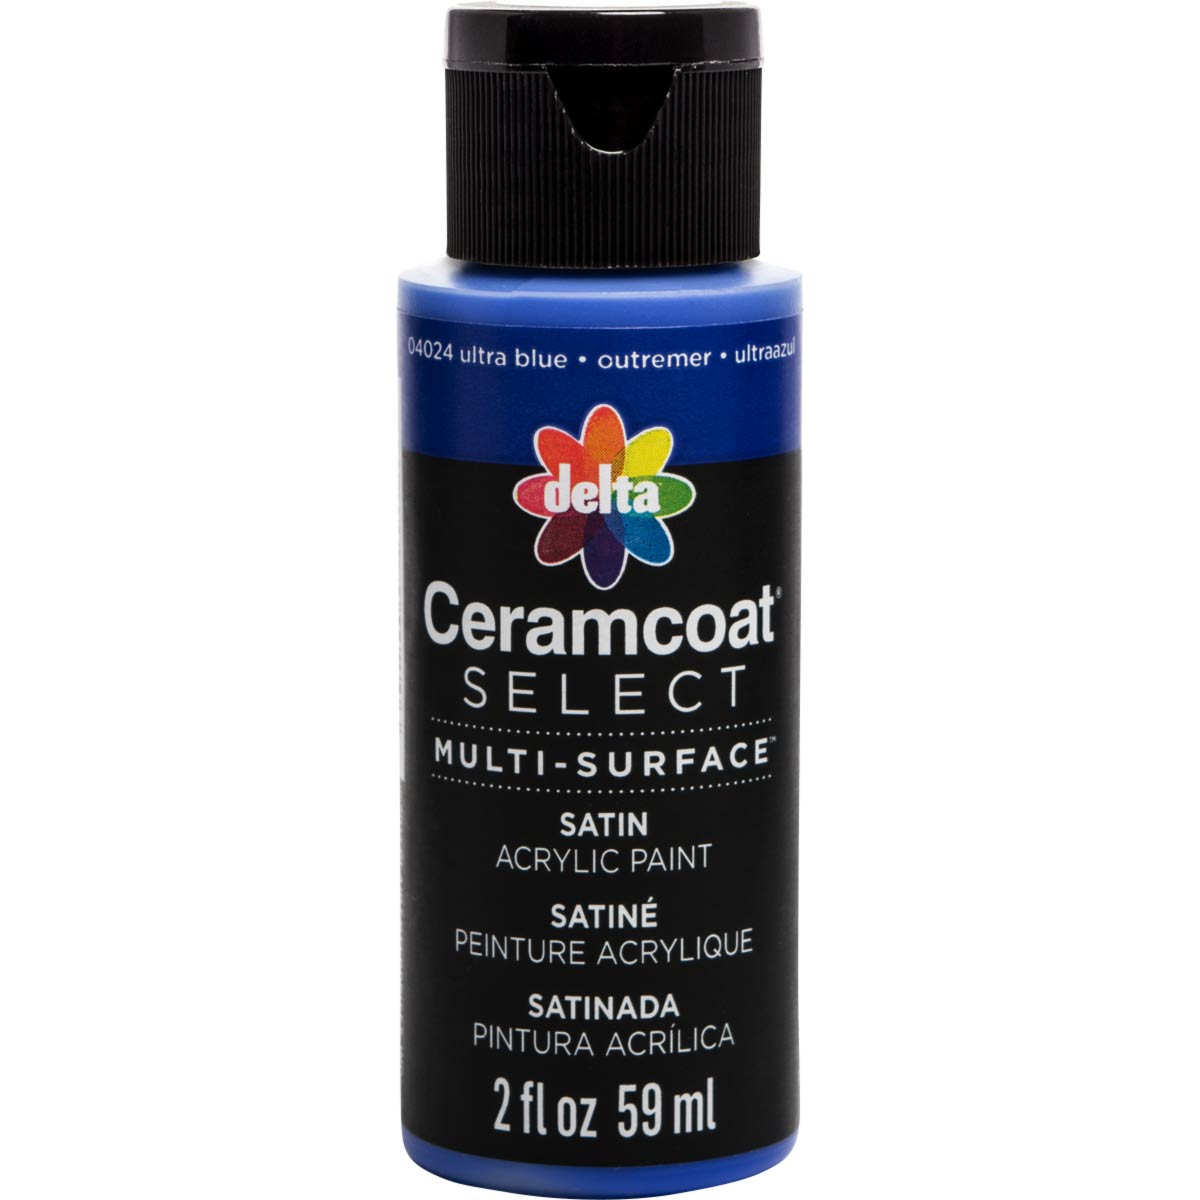 Delta Ceramcoat ® Select Multi-Surface Acrylic Paint - Satin - Ultra Bue, 2 oz. - 04024